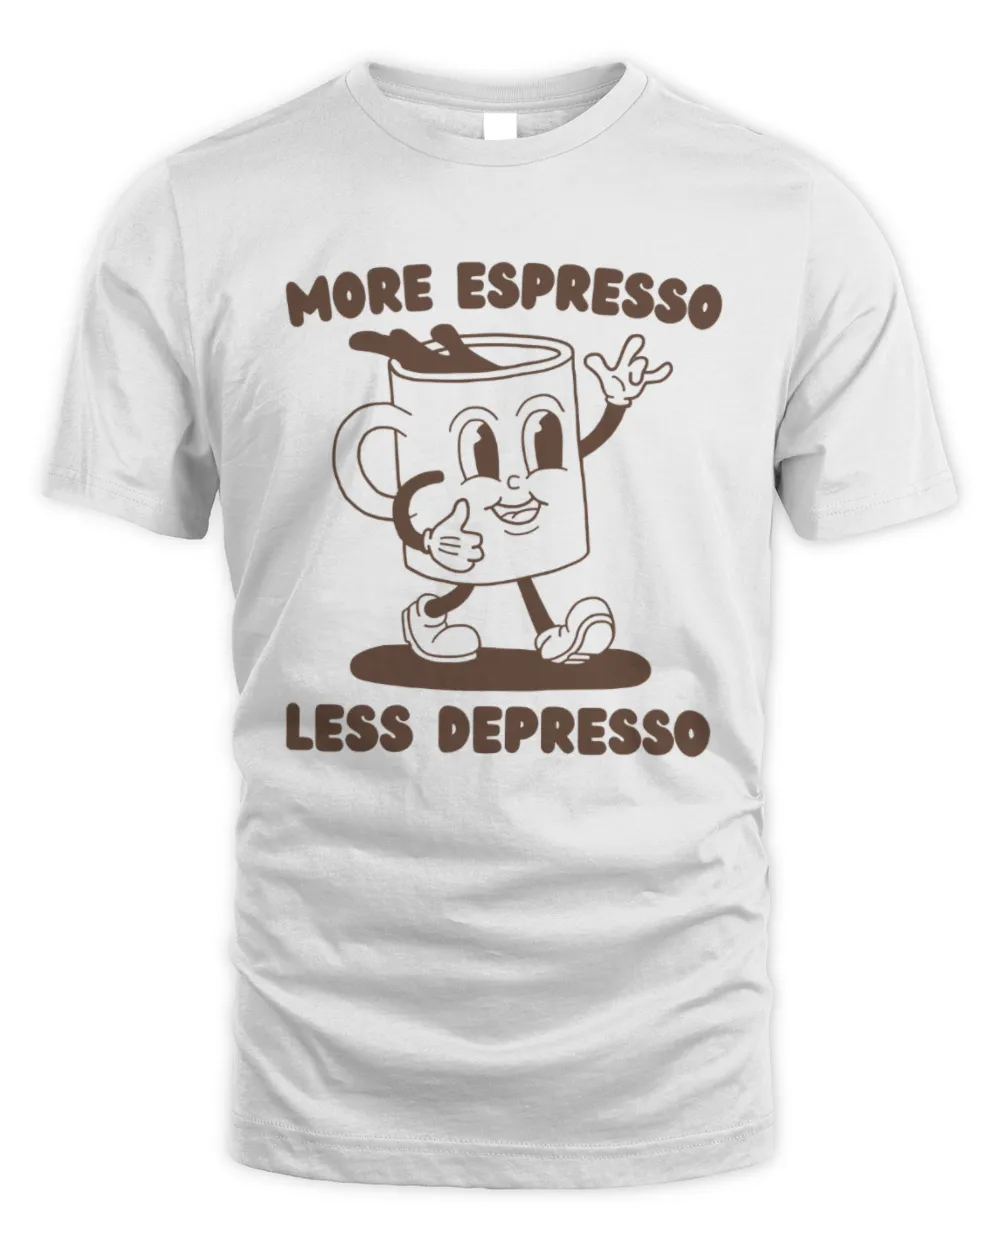 More Espresso Less Depresso Shirt, Unisex Tee, Meme T Shirt, Funny T Shirt, Vintage Drawing Shirt, Coffee Shirt Espresso Shirt, Graphic Tee